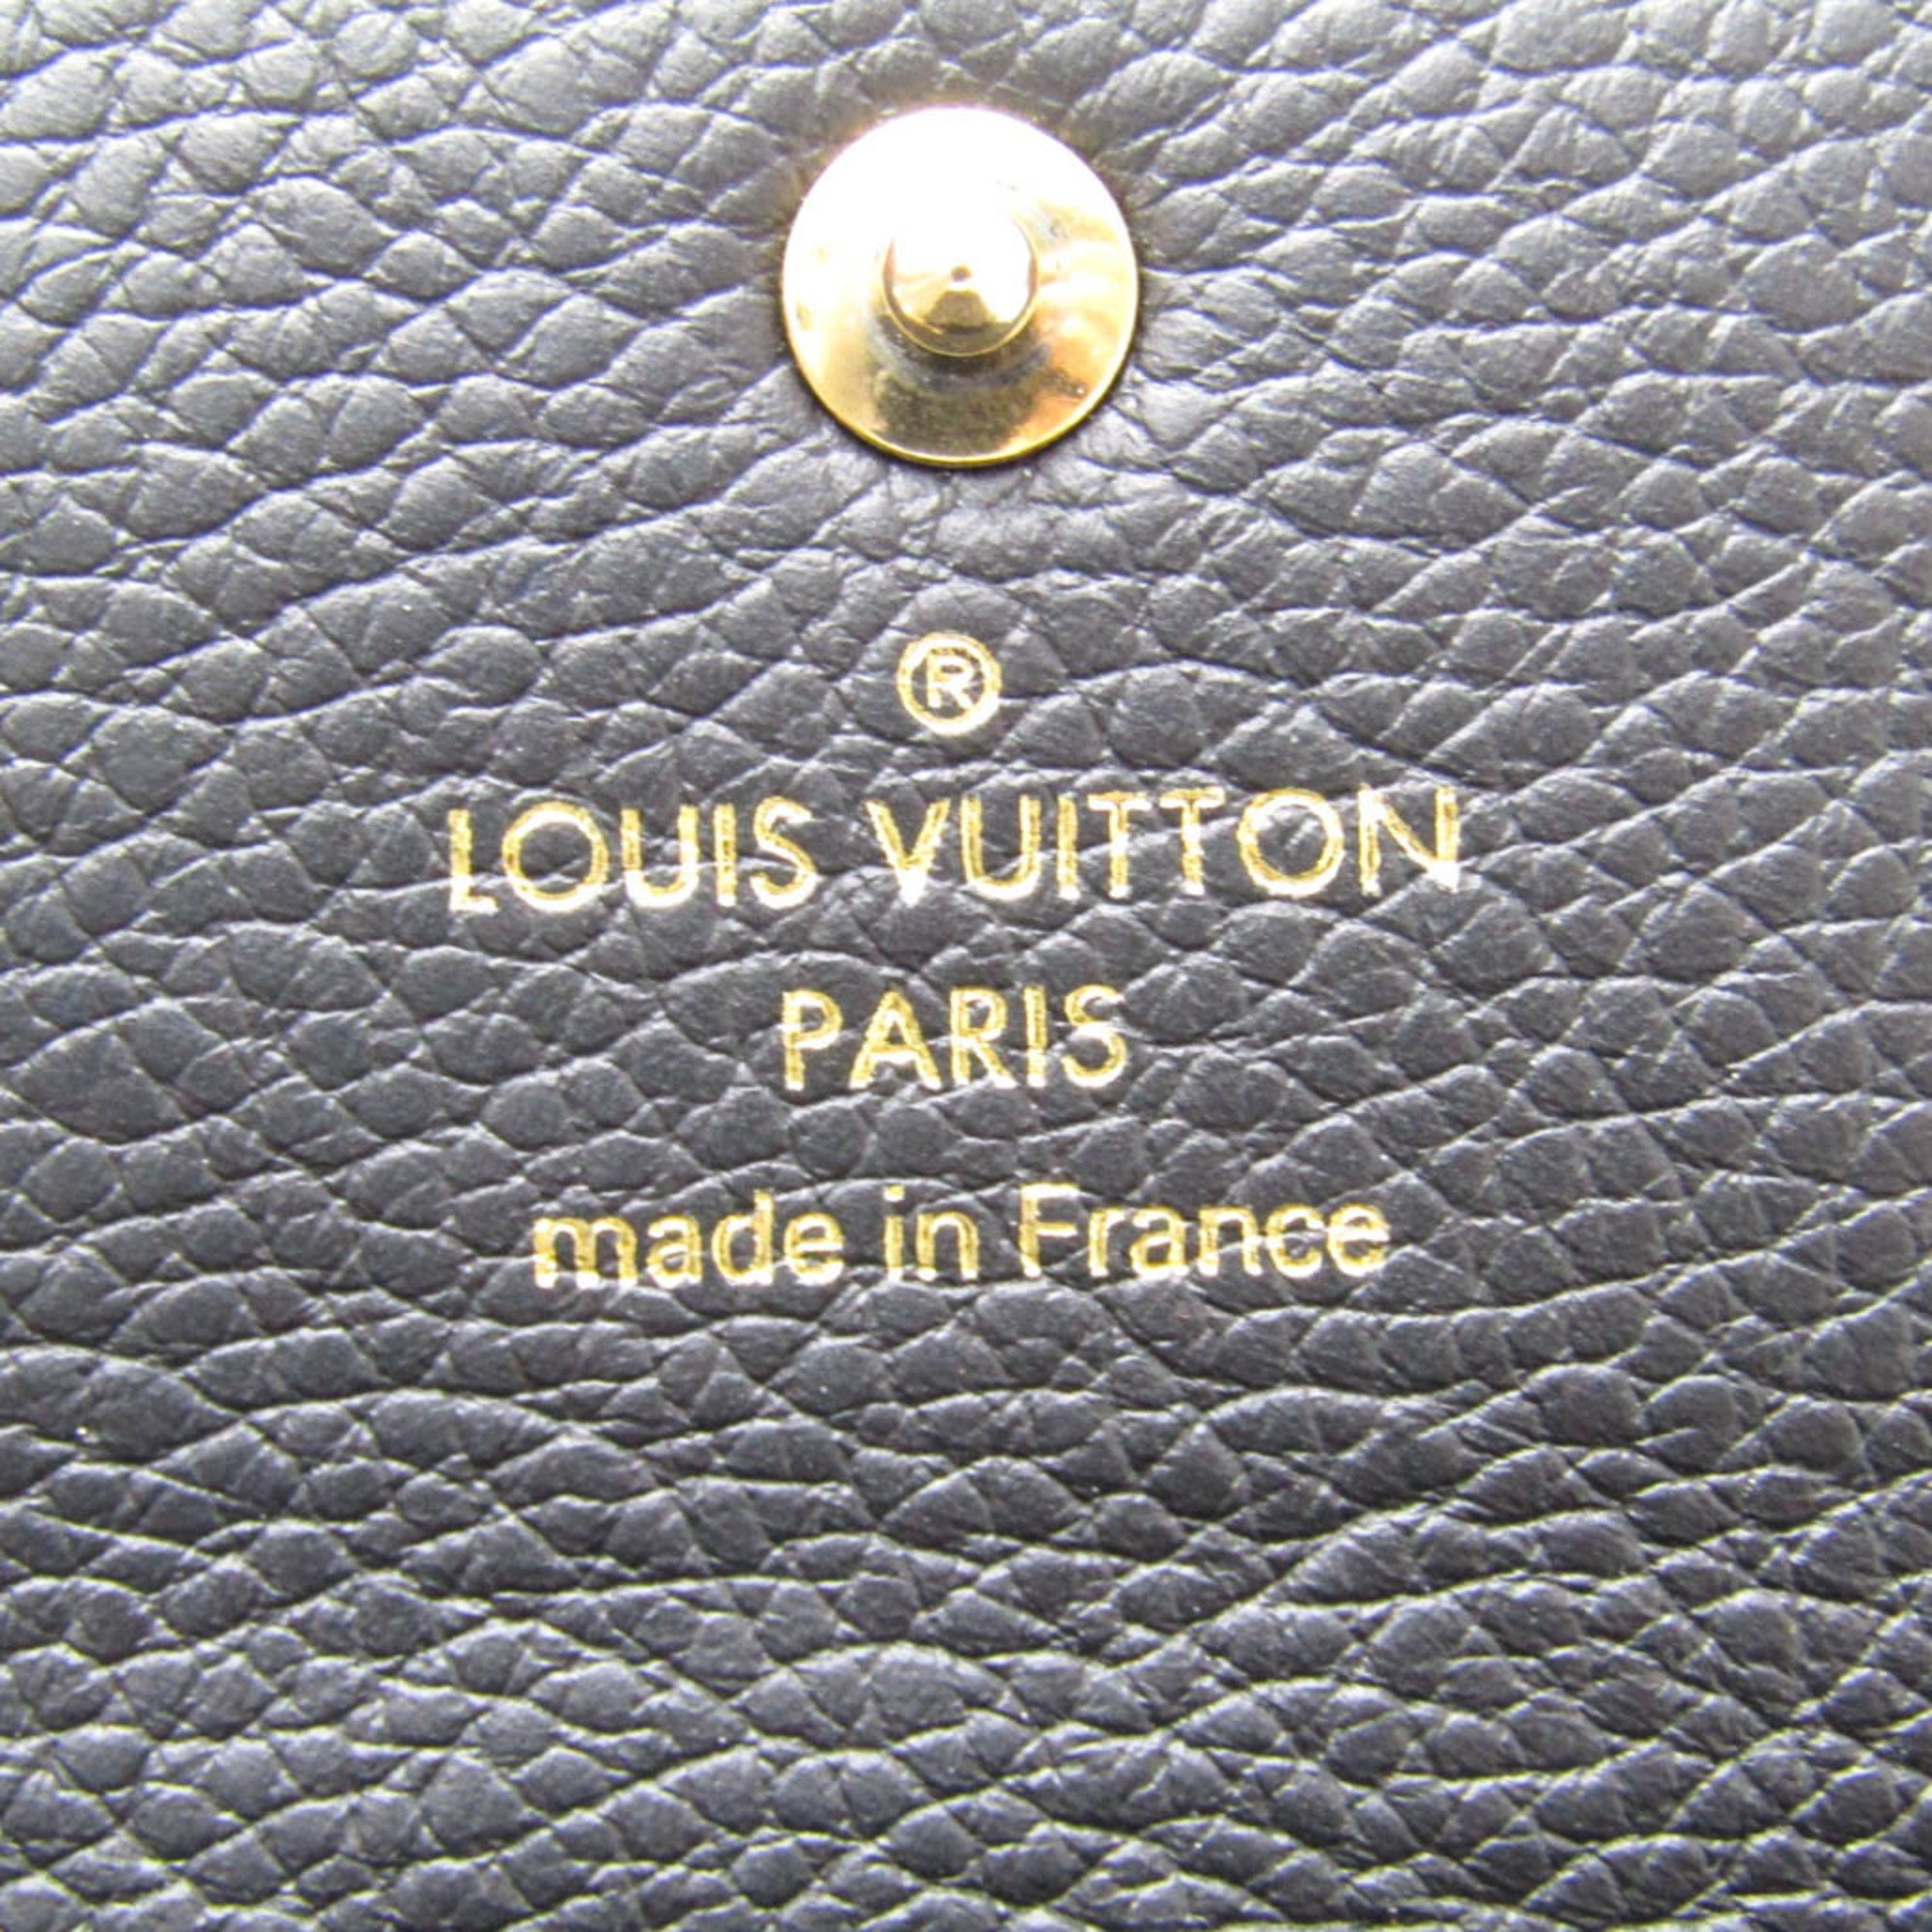 Louis Vuitton Monogram Empreinte Multicles 6 M64421 Women's Monogram Empreinte Key Case Noir